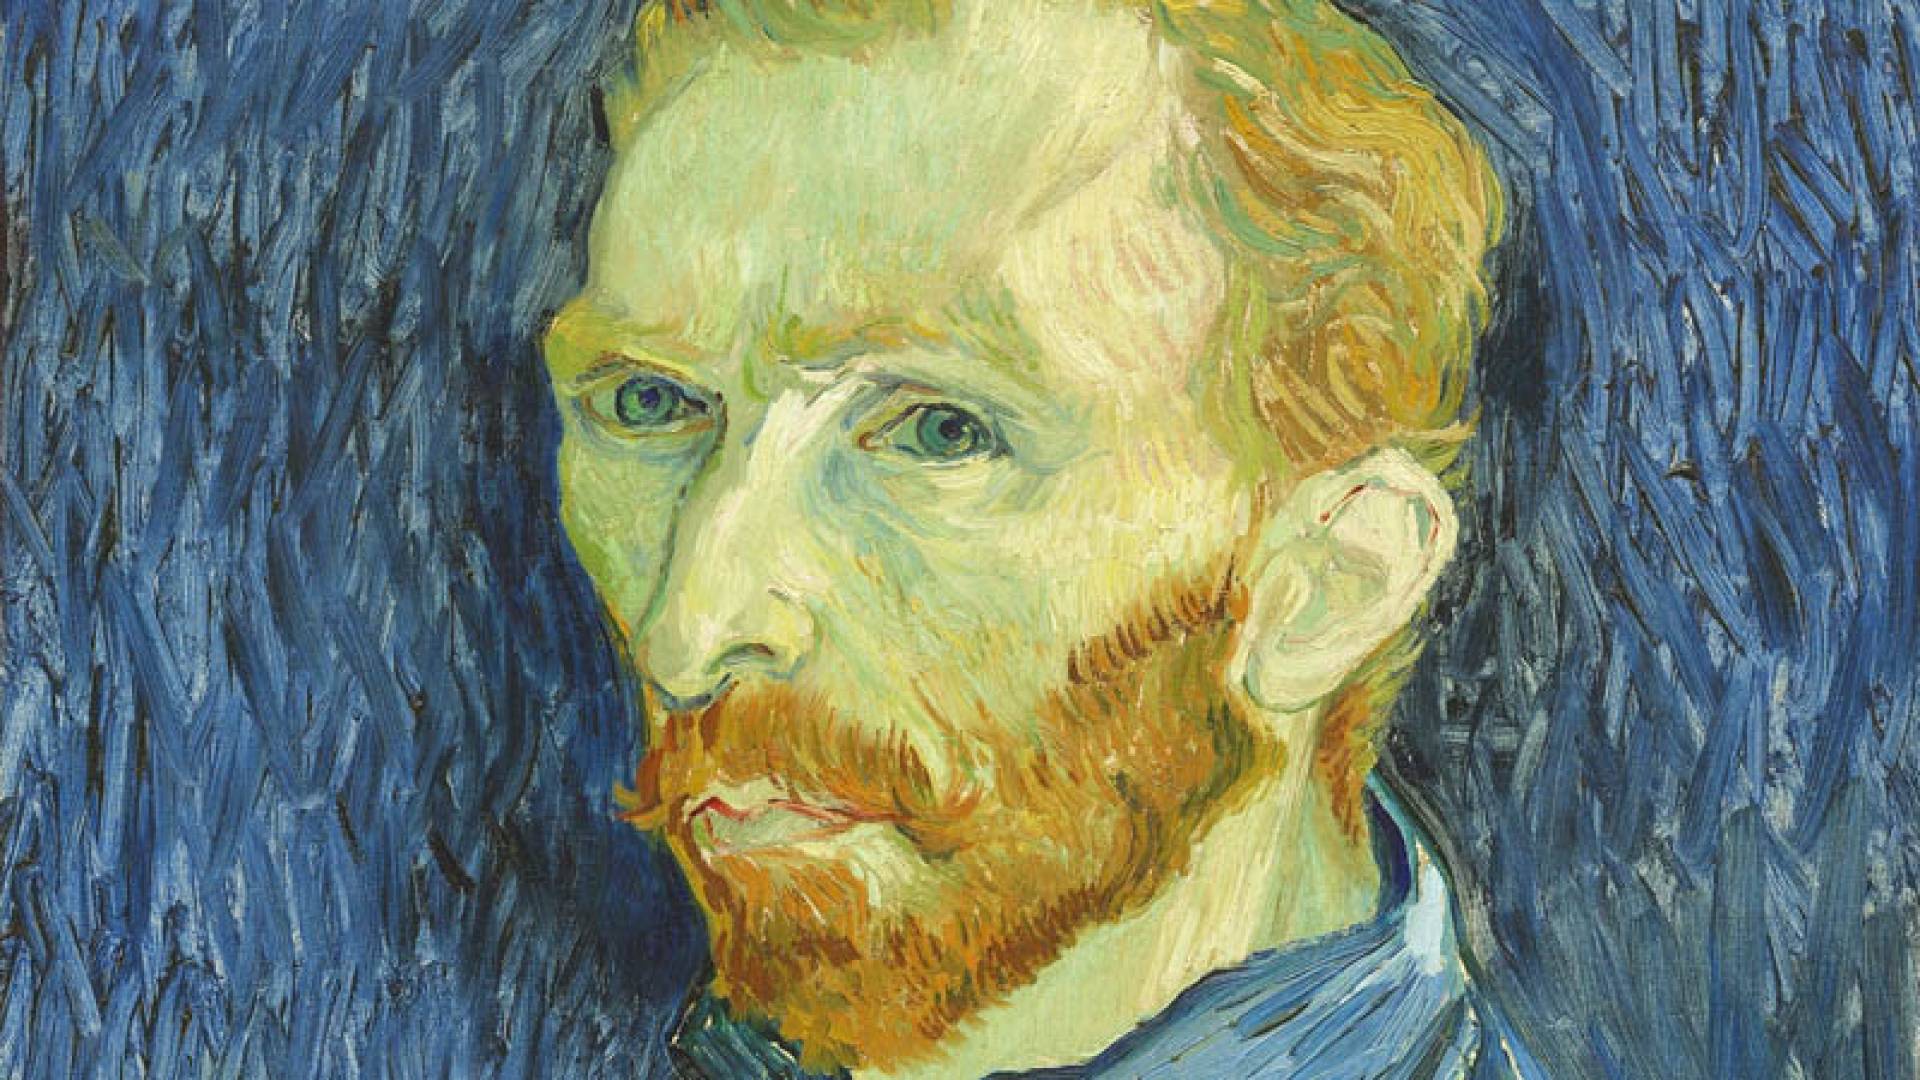 NATIONAL GALLERY WASHINGTON, Autoritratto Van Gogh